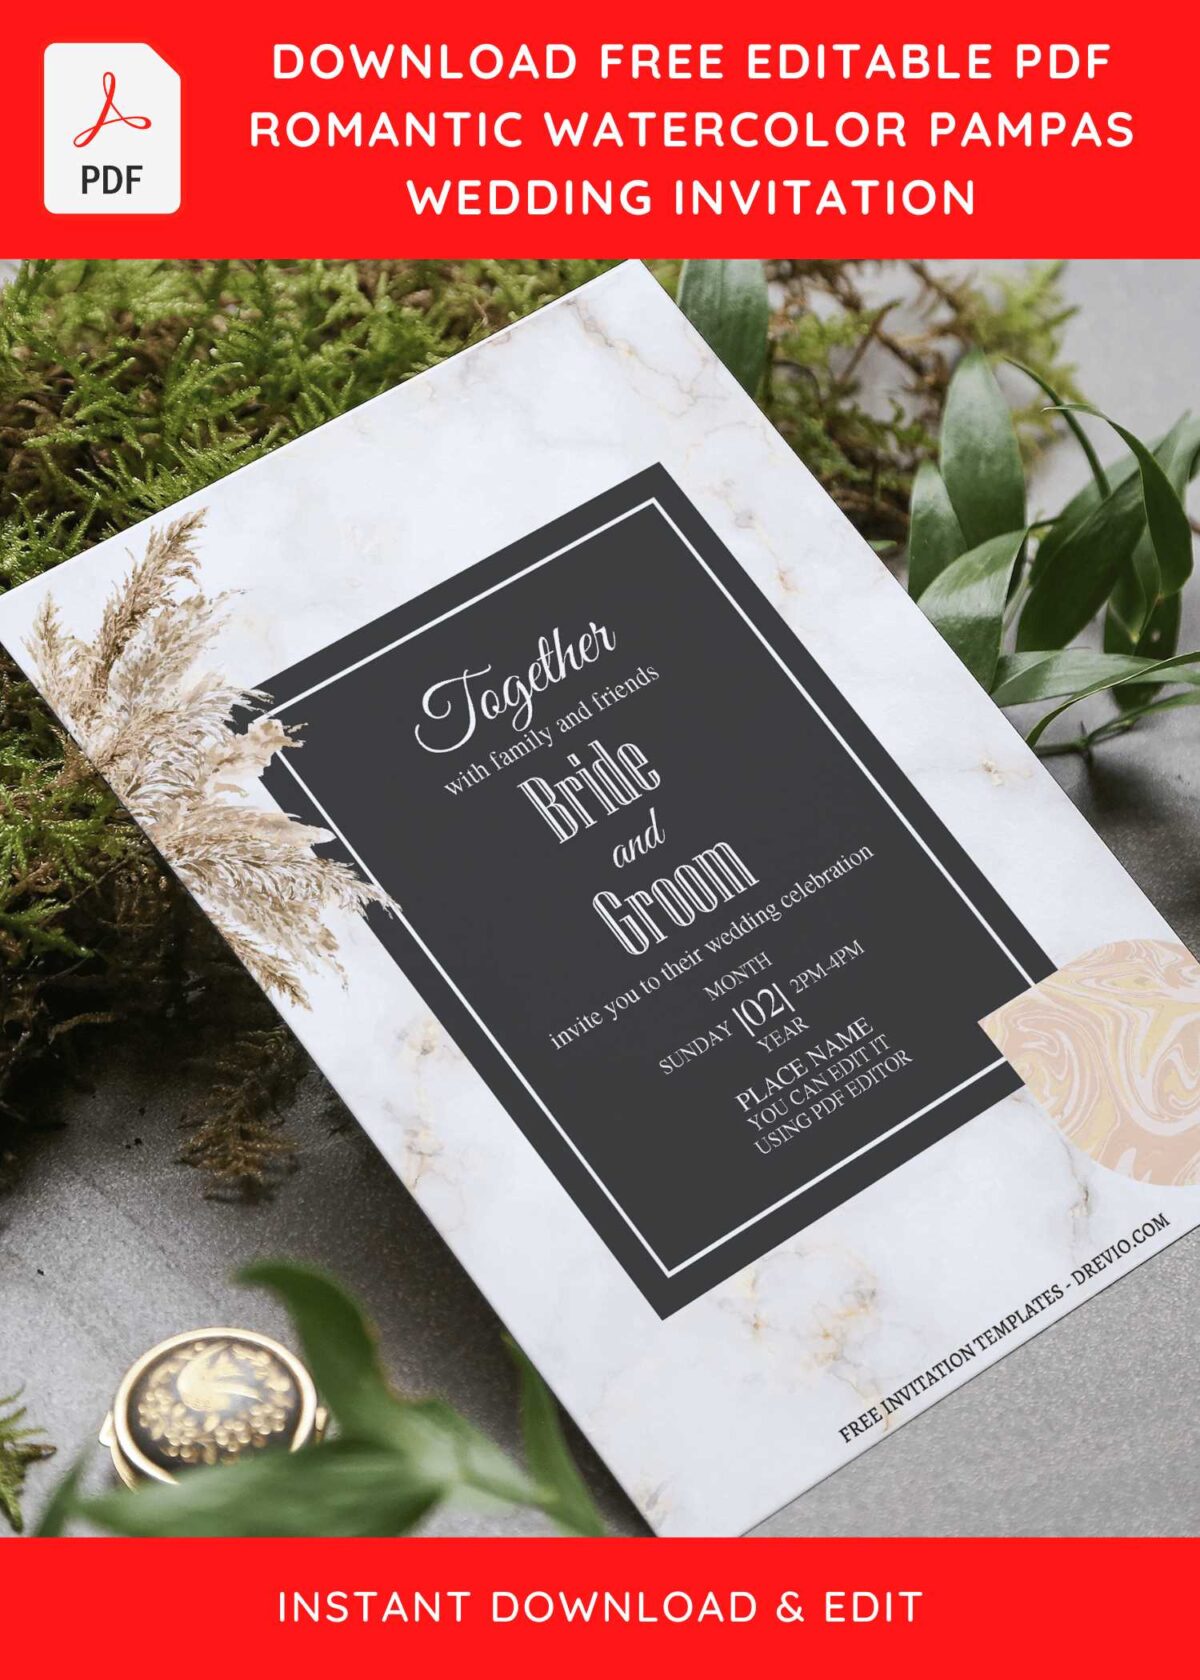 (Free Editable PDF) Fancy Rustic Pampas Wedding Invitation Templates  with Rustic Boho leaves